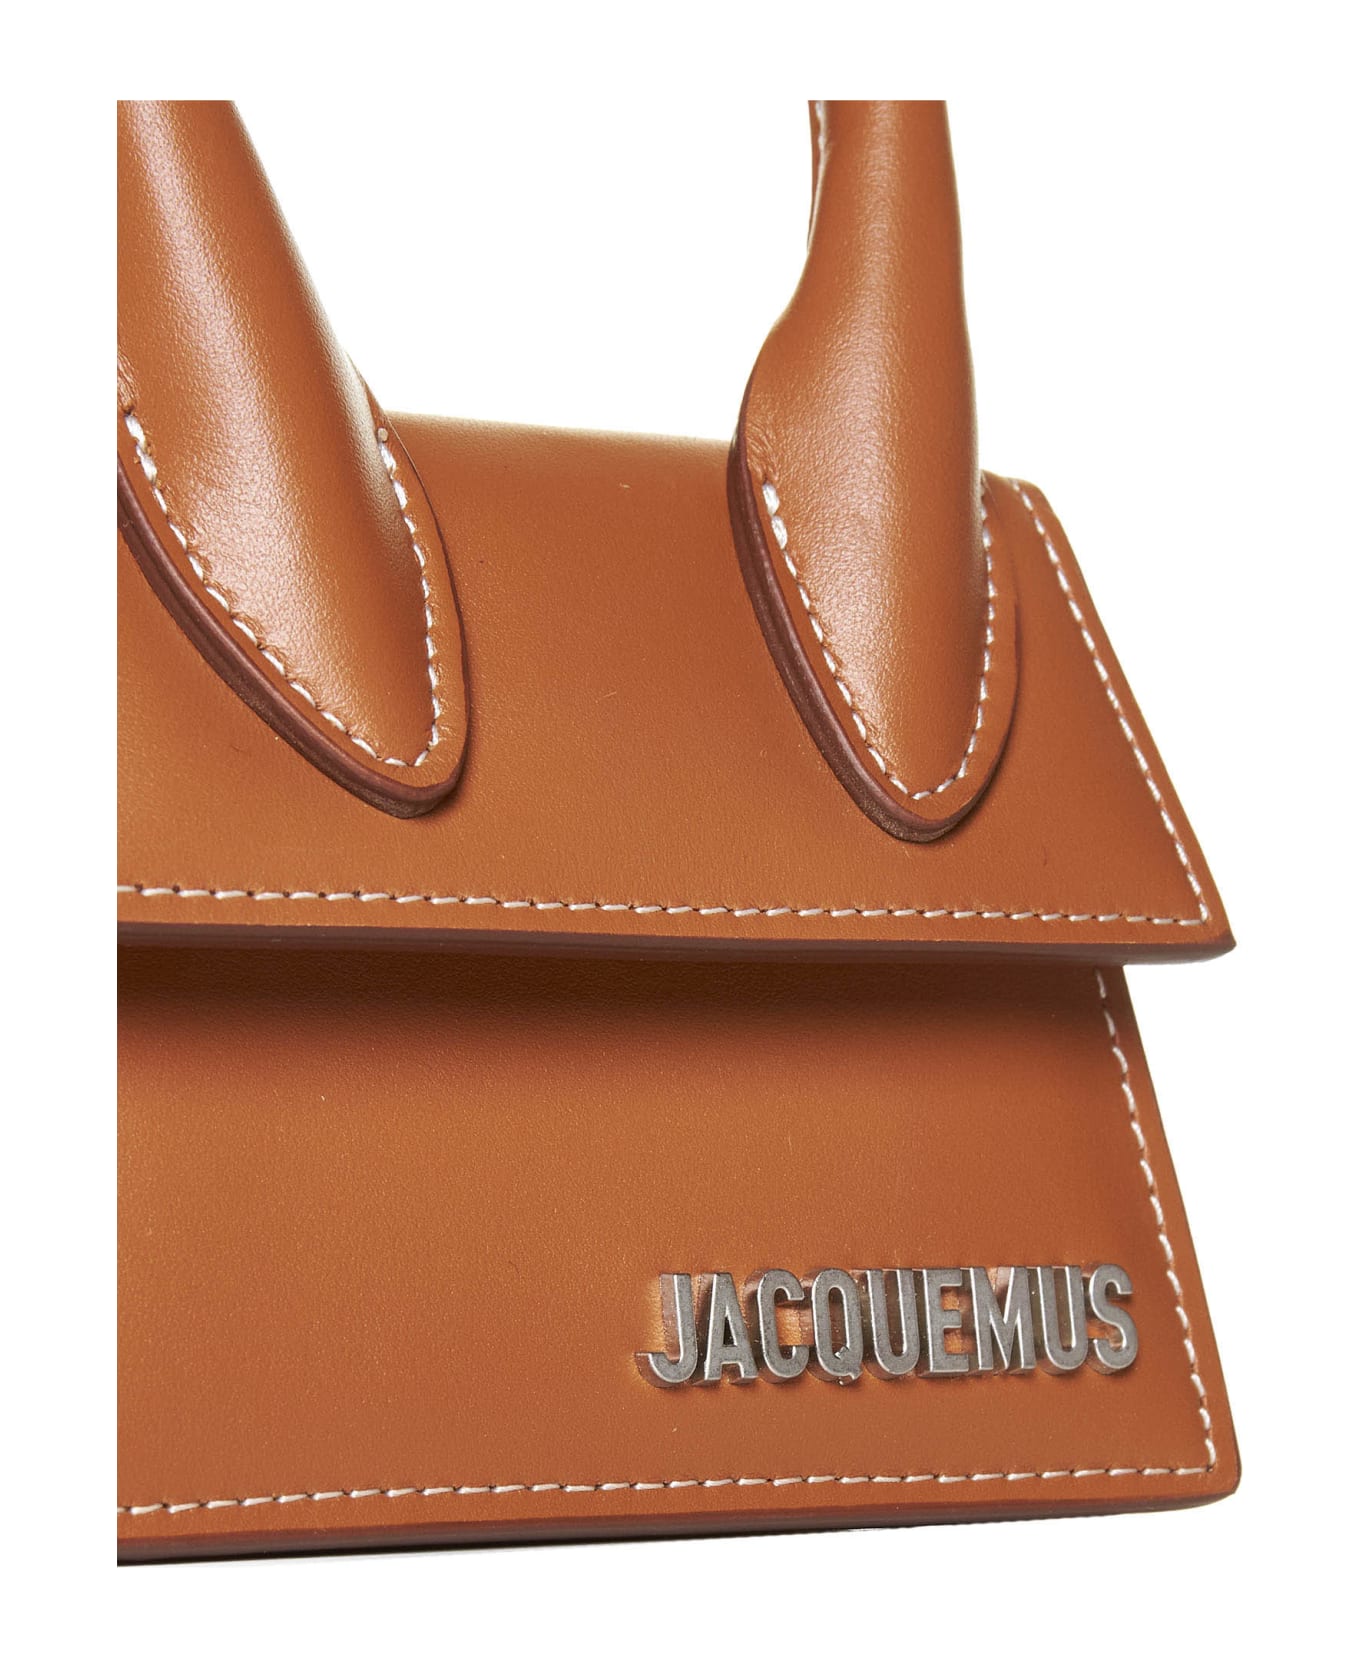 Jacquemus Le Chiquito Homme Bag - Light brown 2